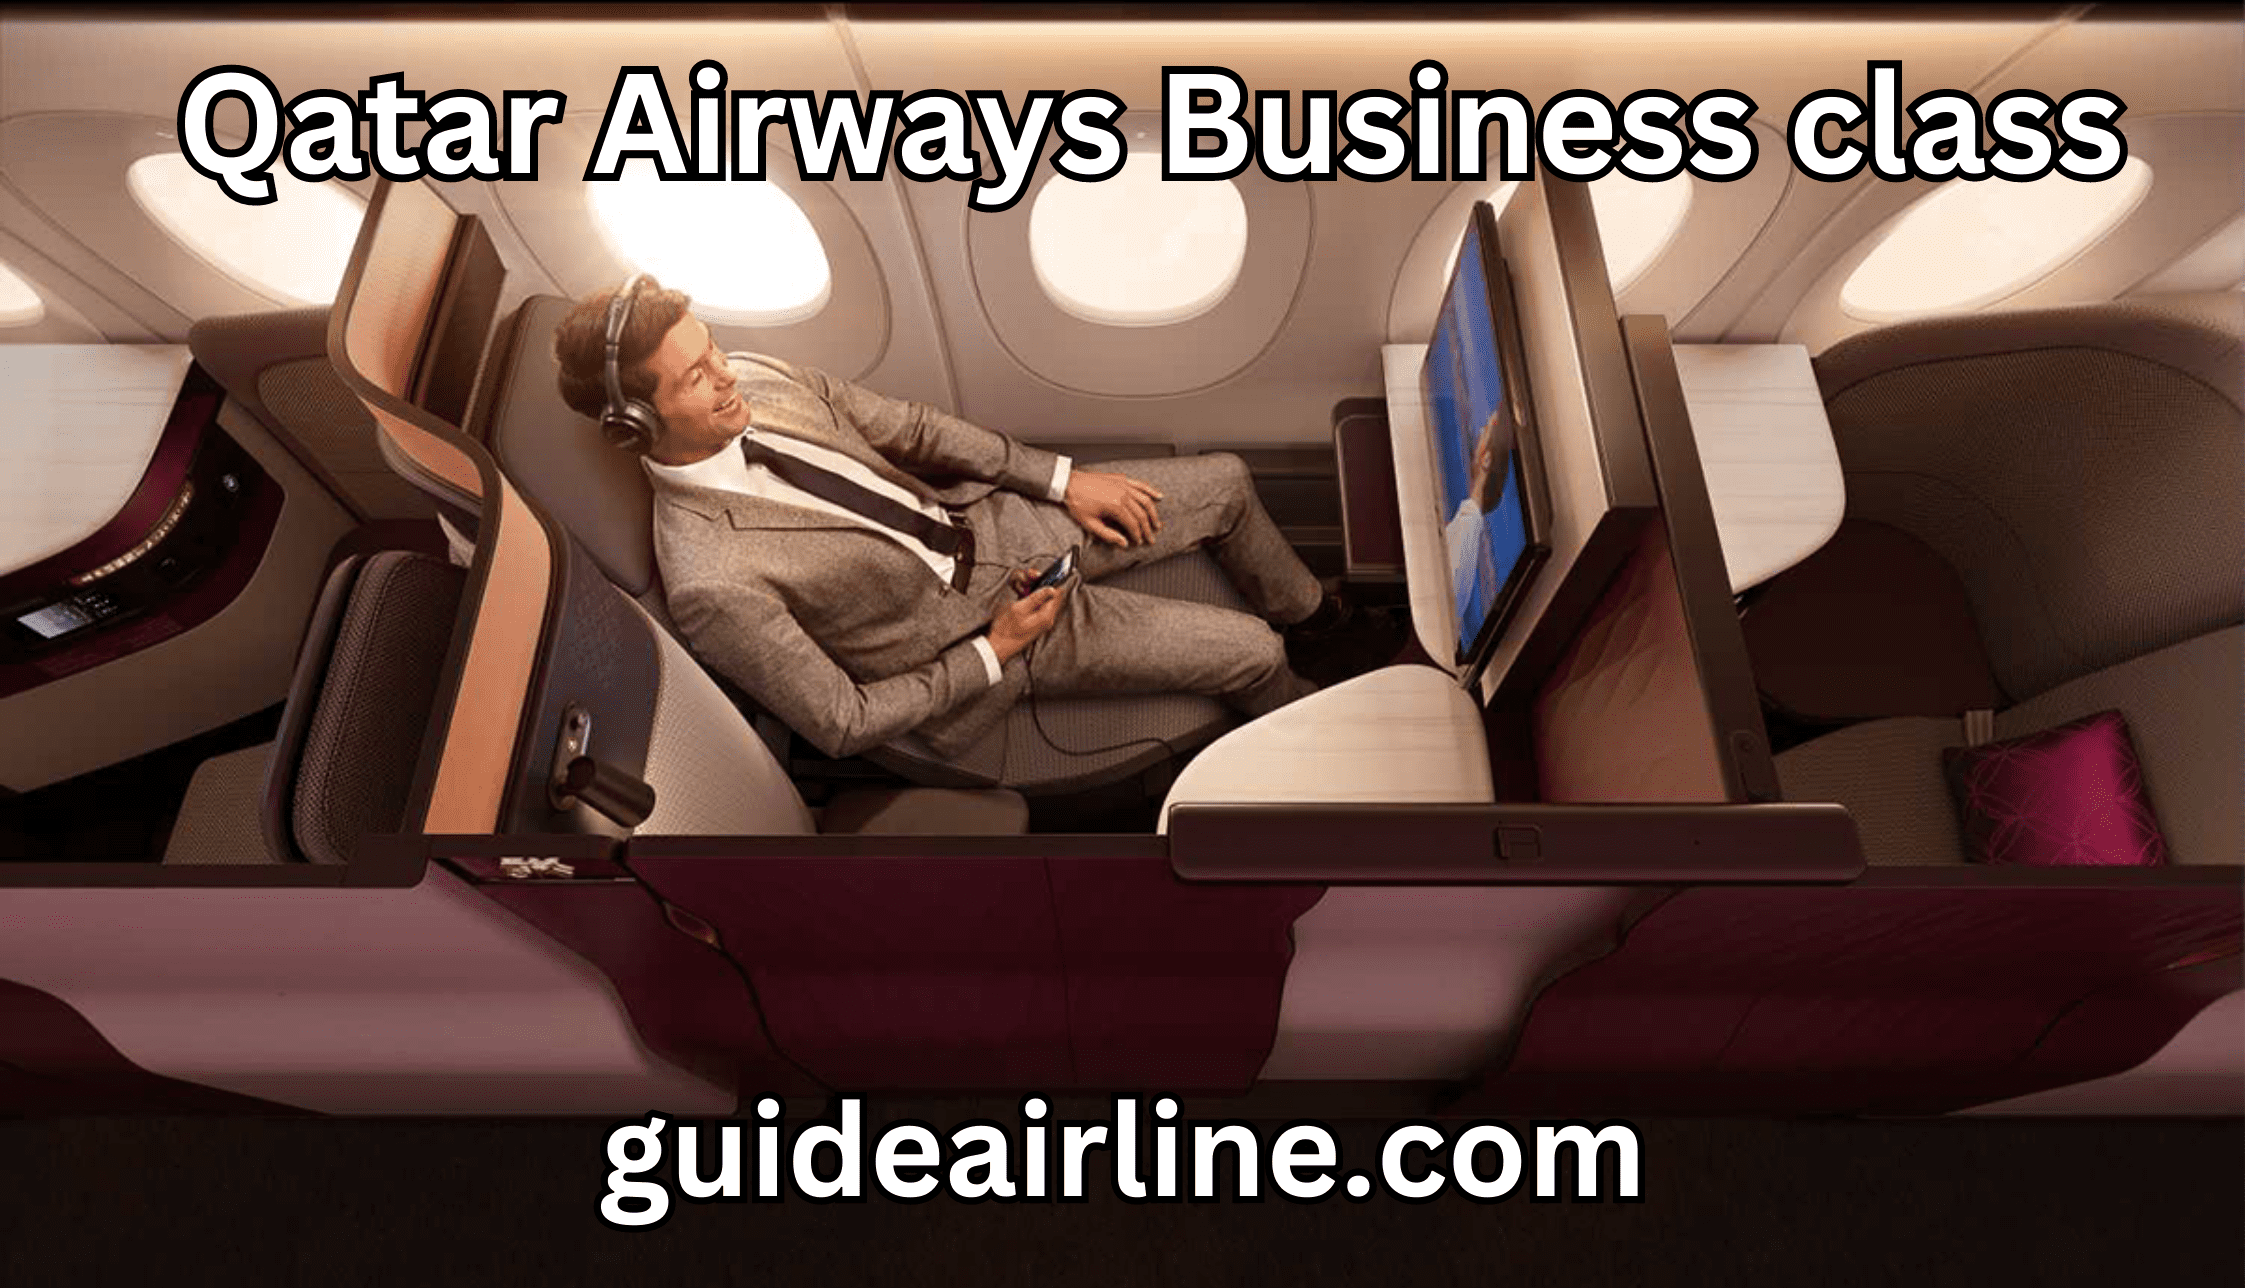 Qatar Airways Business class